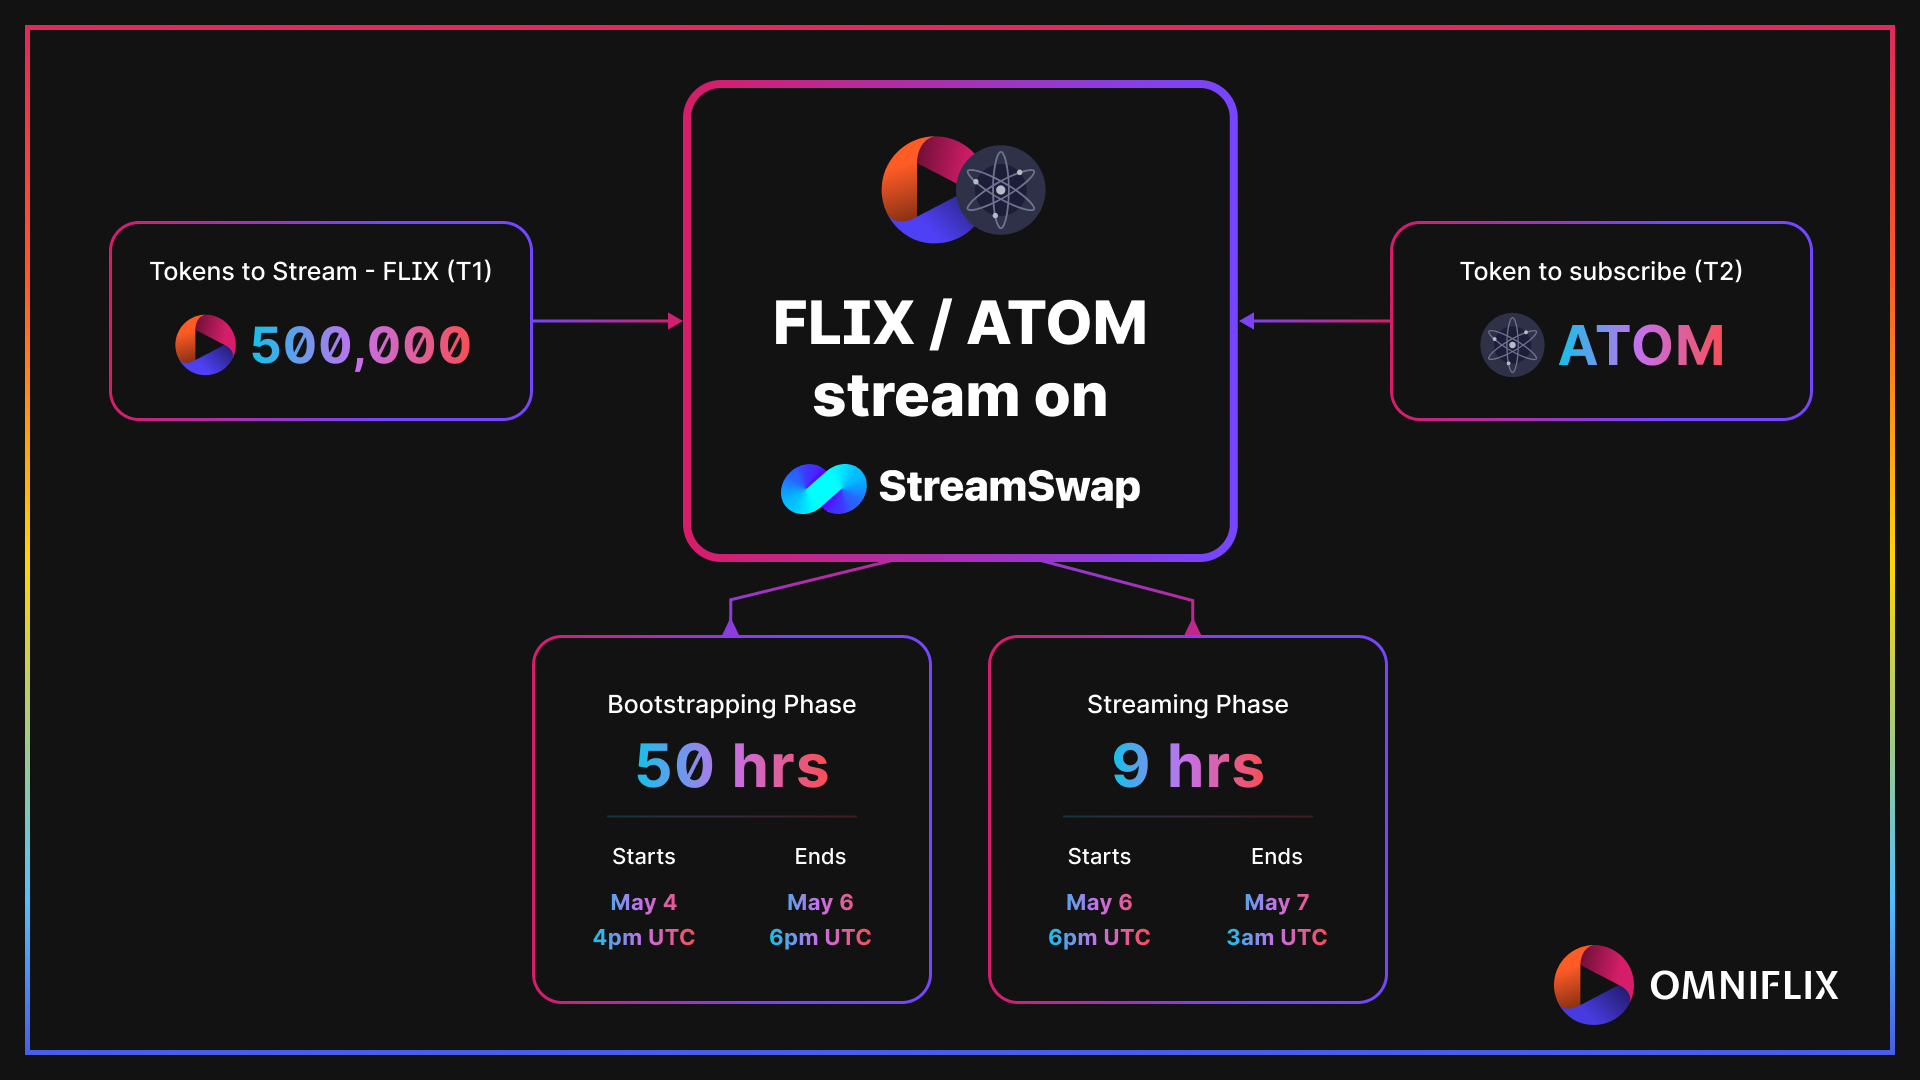 Details of the FLIX/ATOM stream